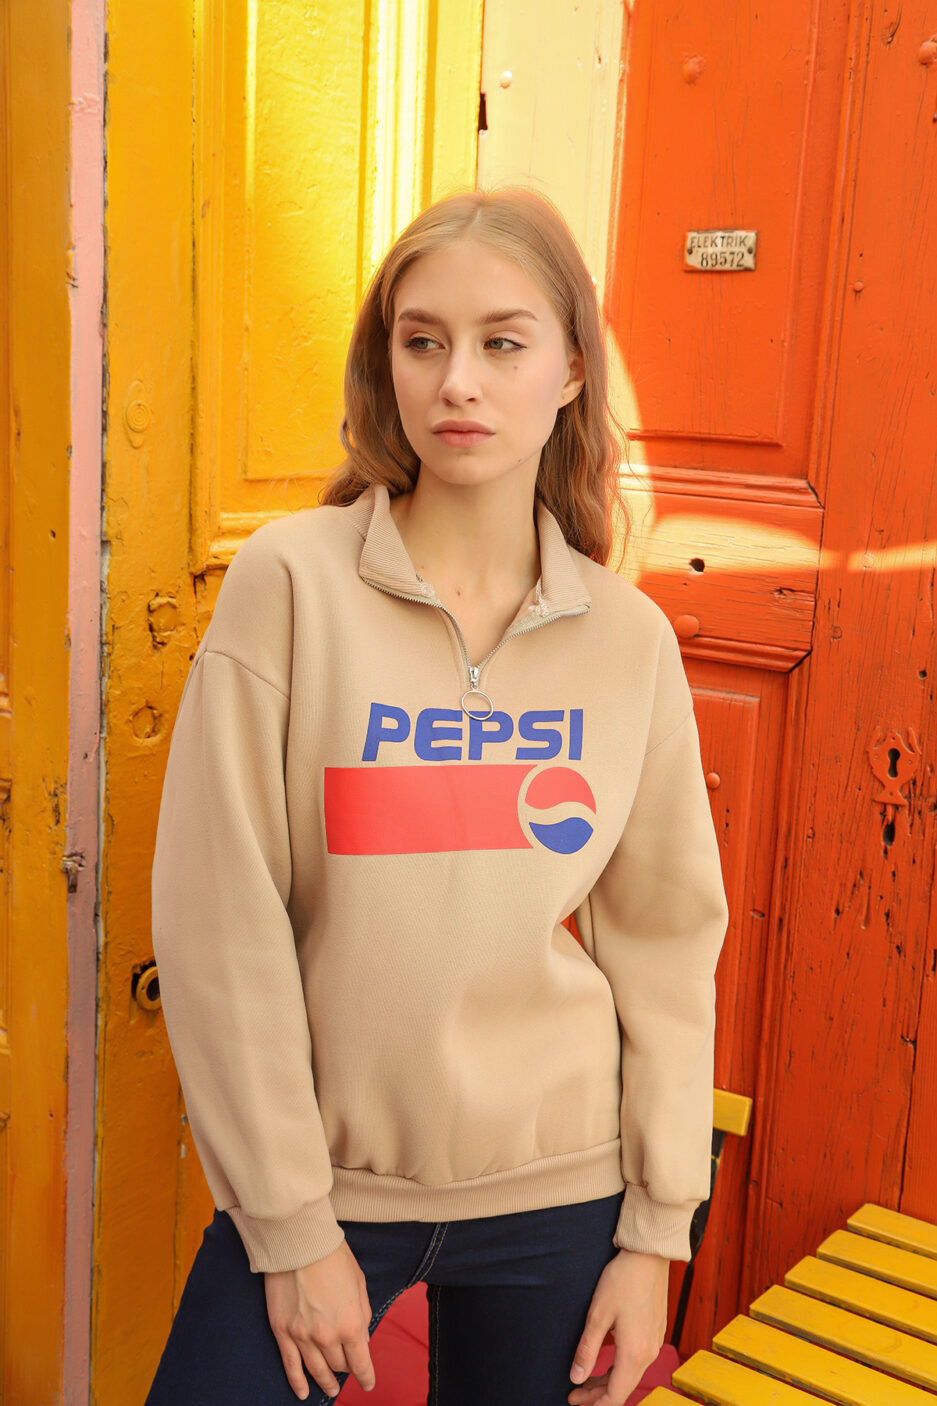 Pepsi Sweatshirt for Women's